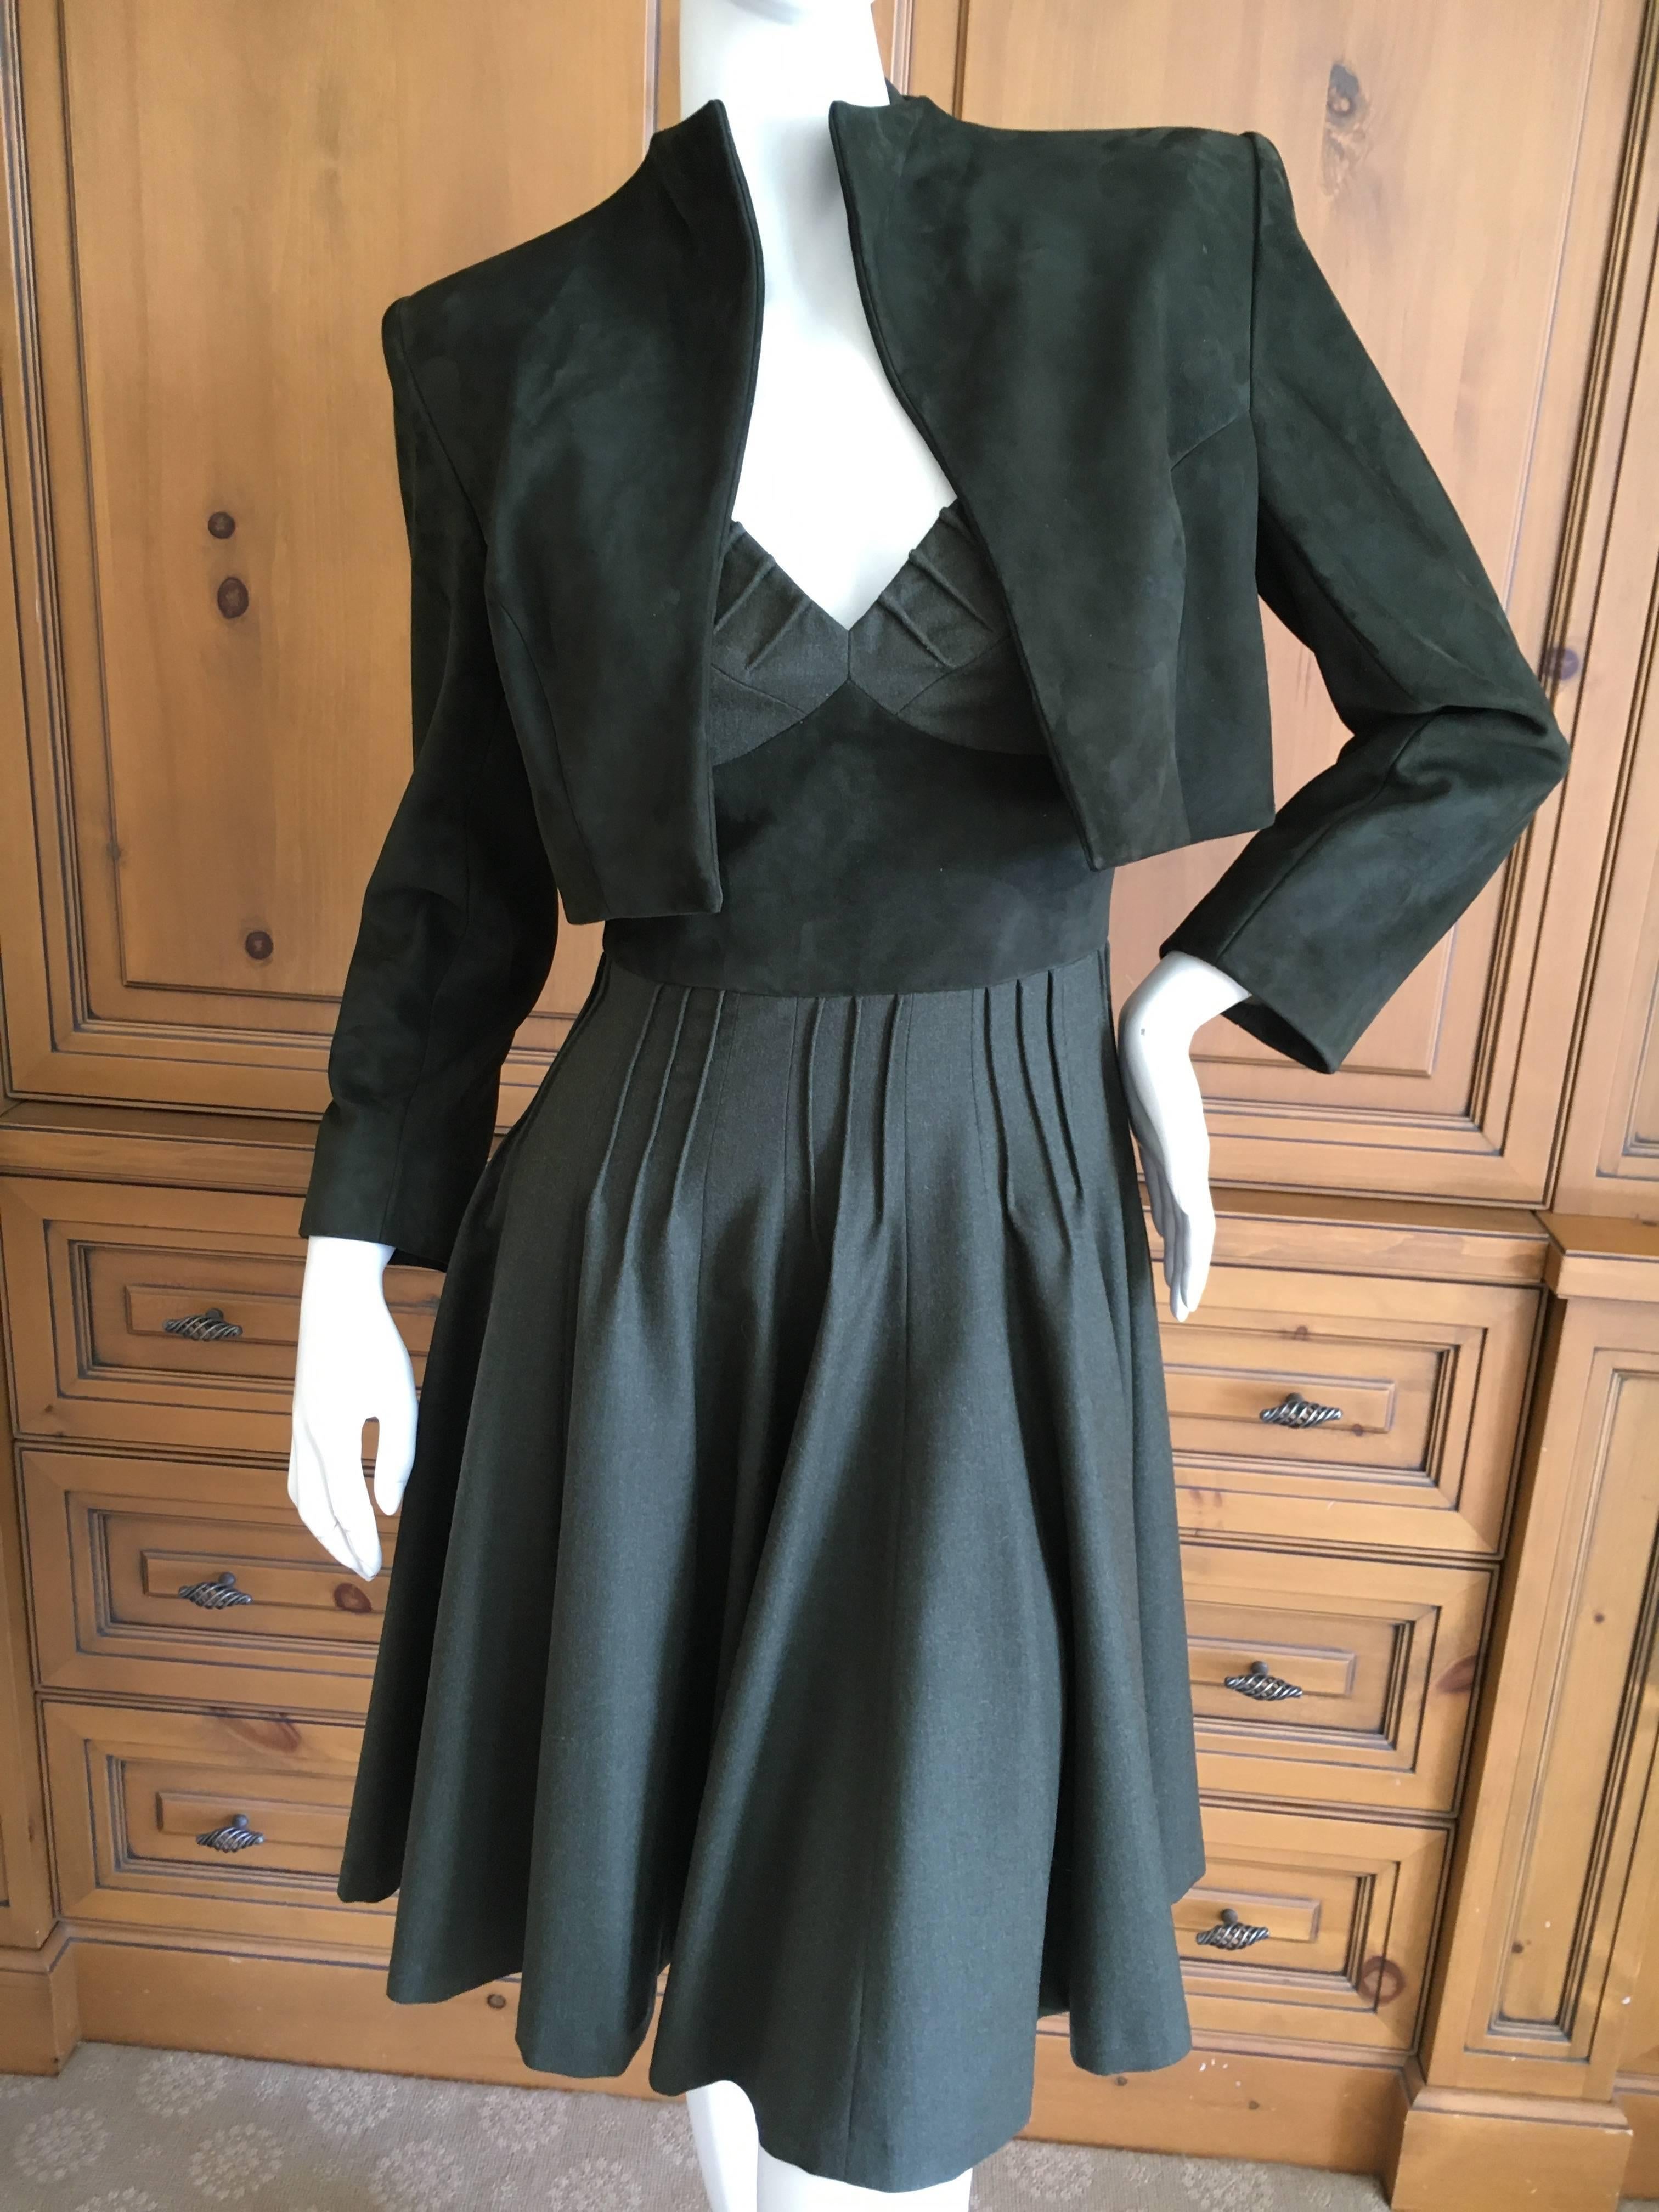 Rubin Singer Tyrollean Inspired Dress and Jacket For Sale 2